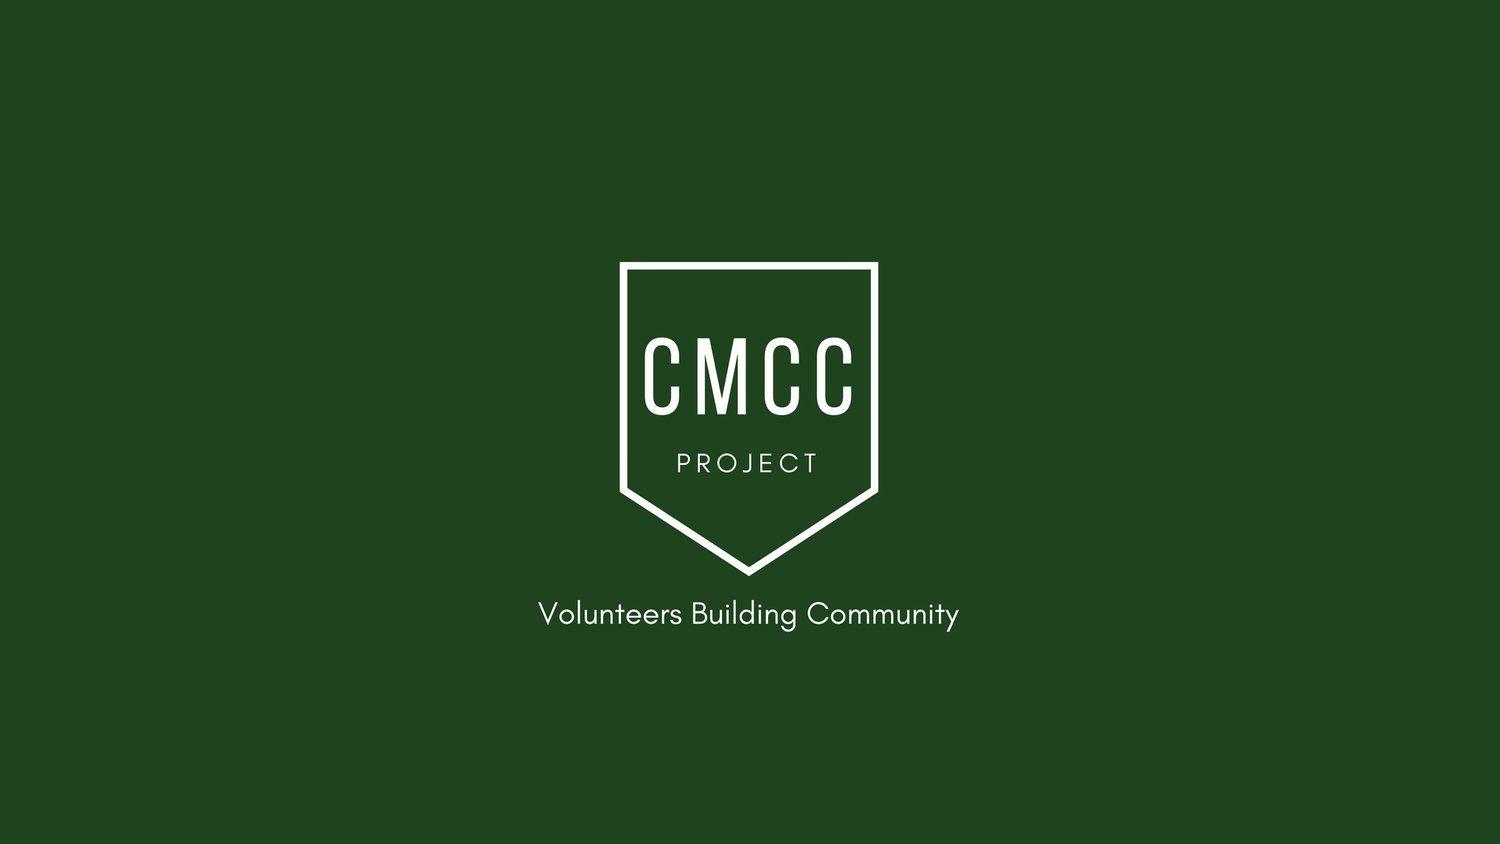 CMCC Logo - CMCC project